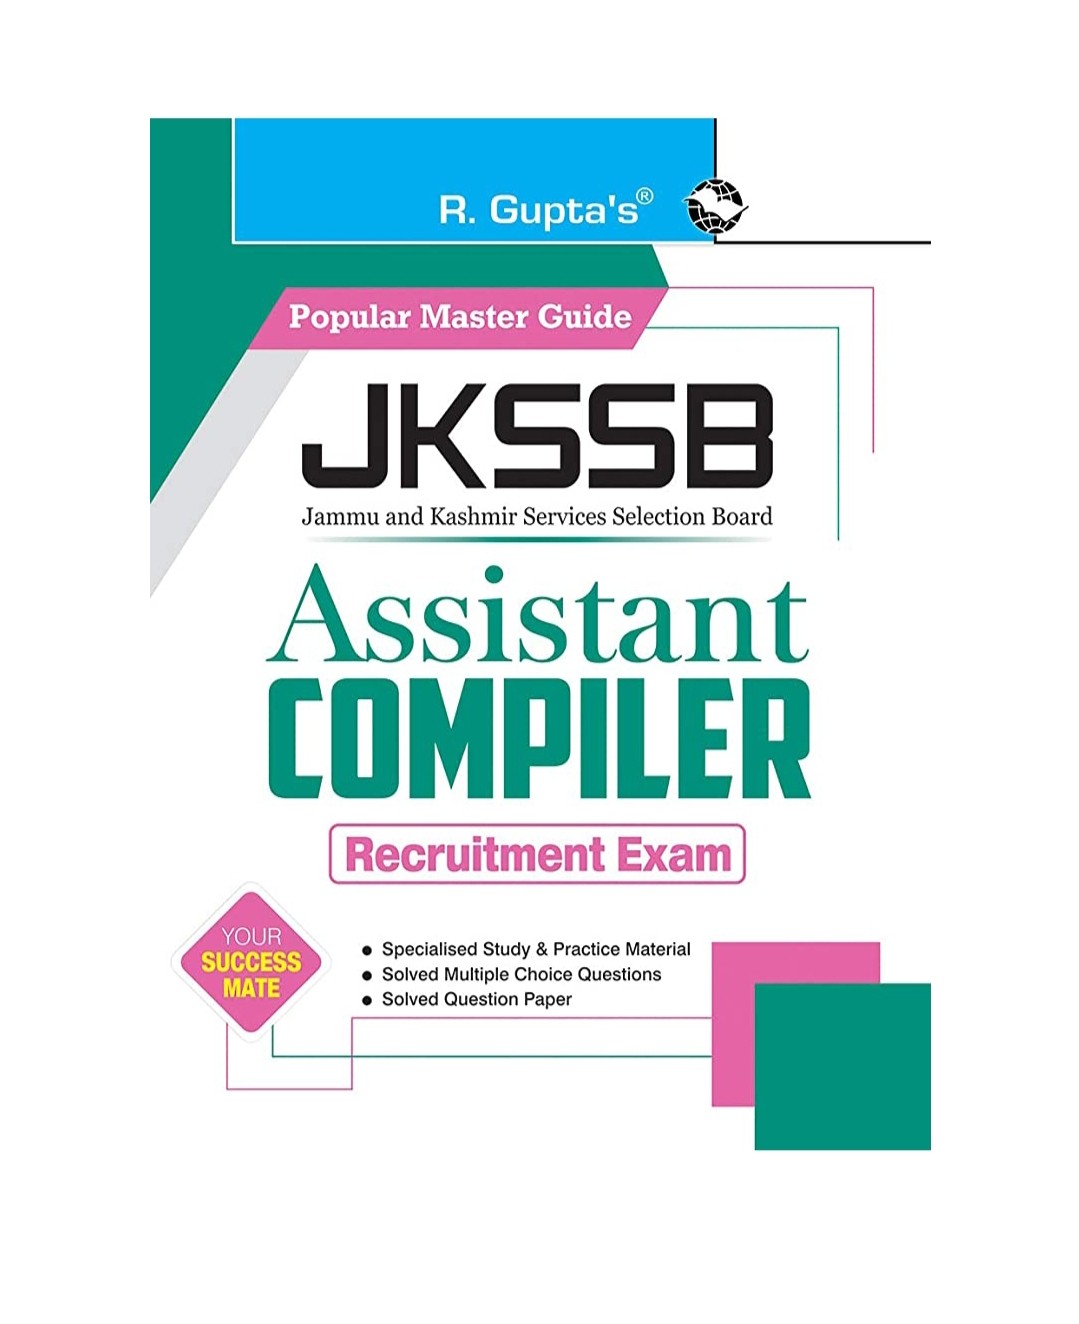 JKSSB Assistant Compiler Recruitment Exam Guide pic